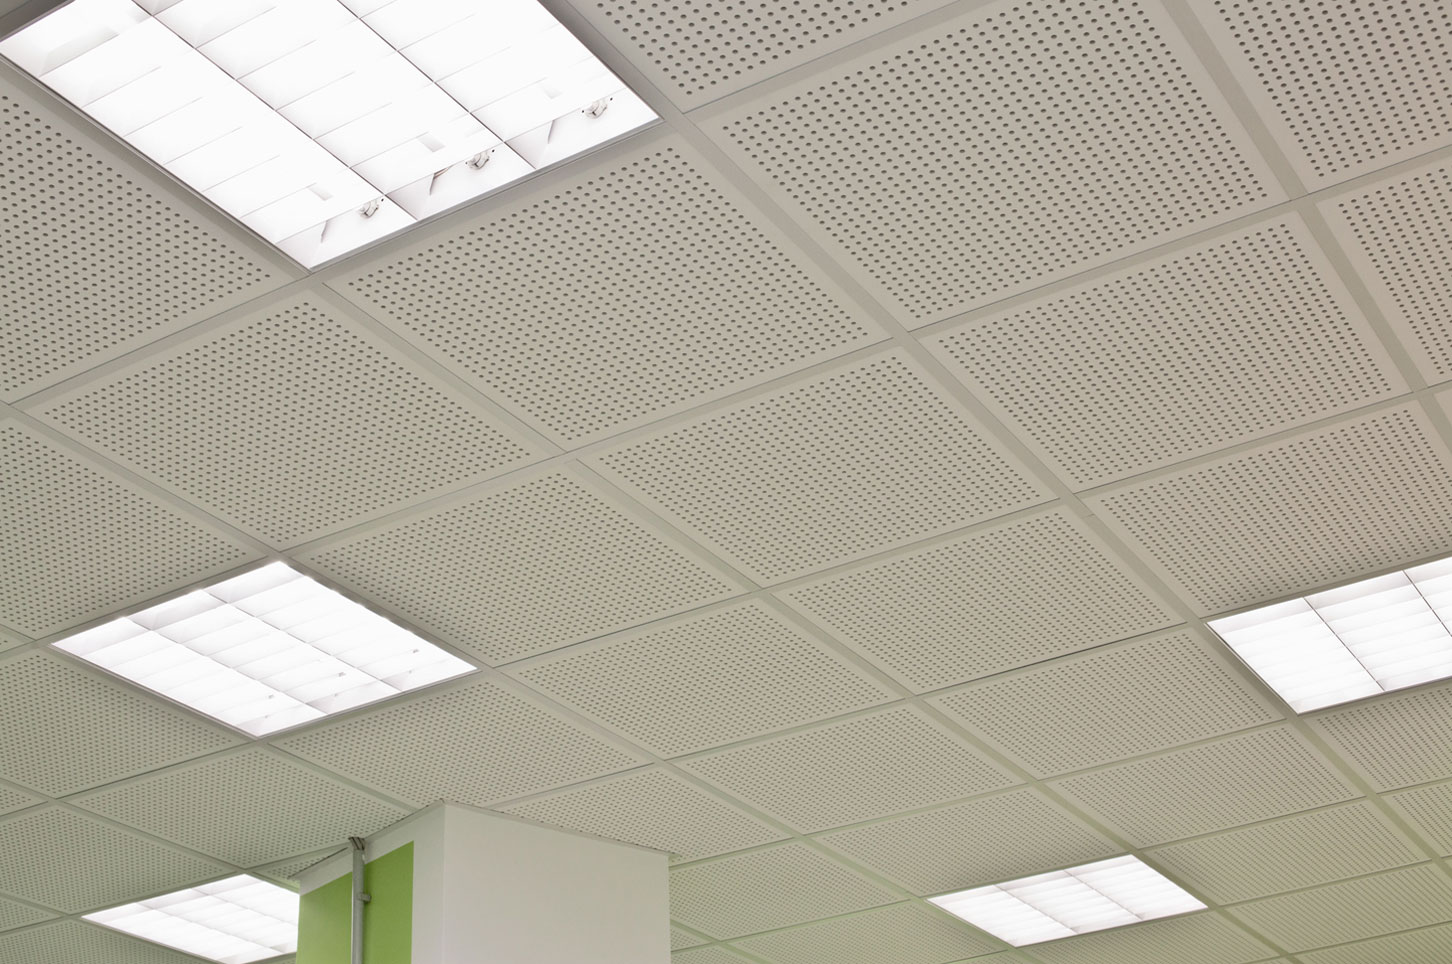 Perforated Gypsum Ceiling Tiles Lanitis Aristophanous